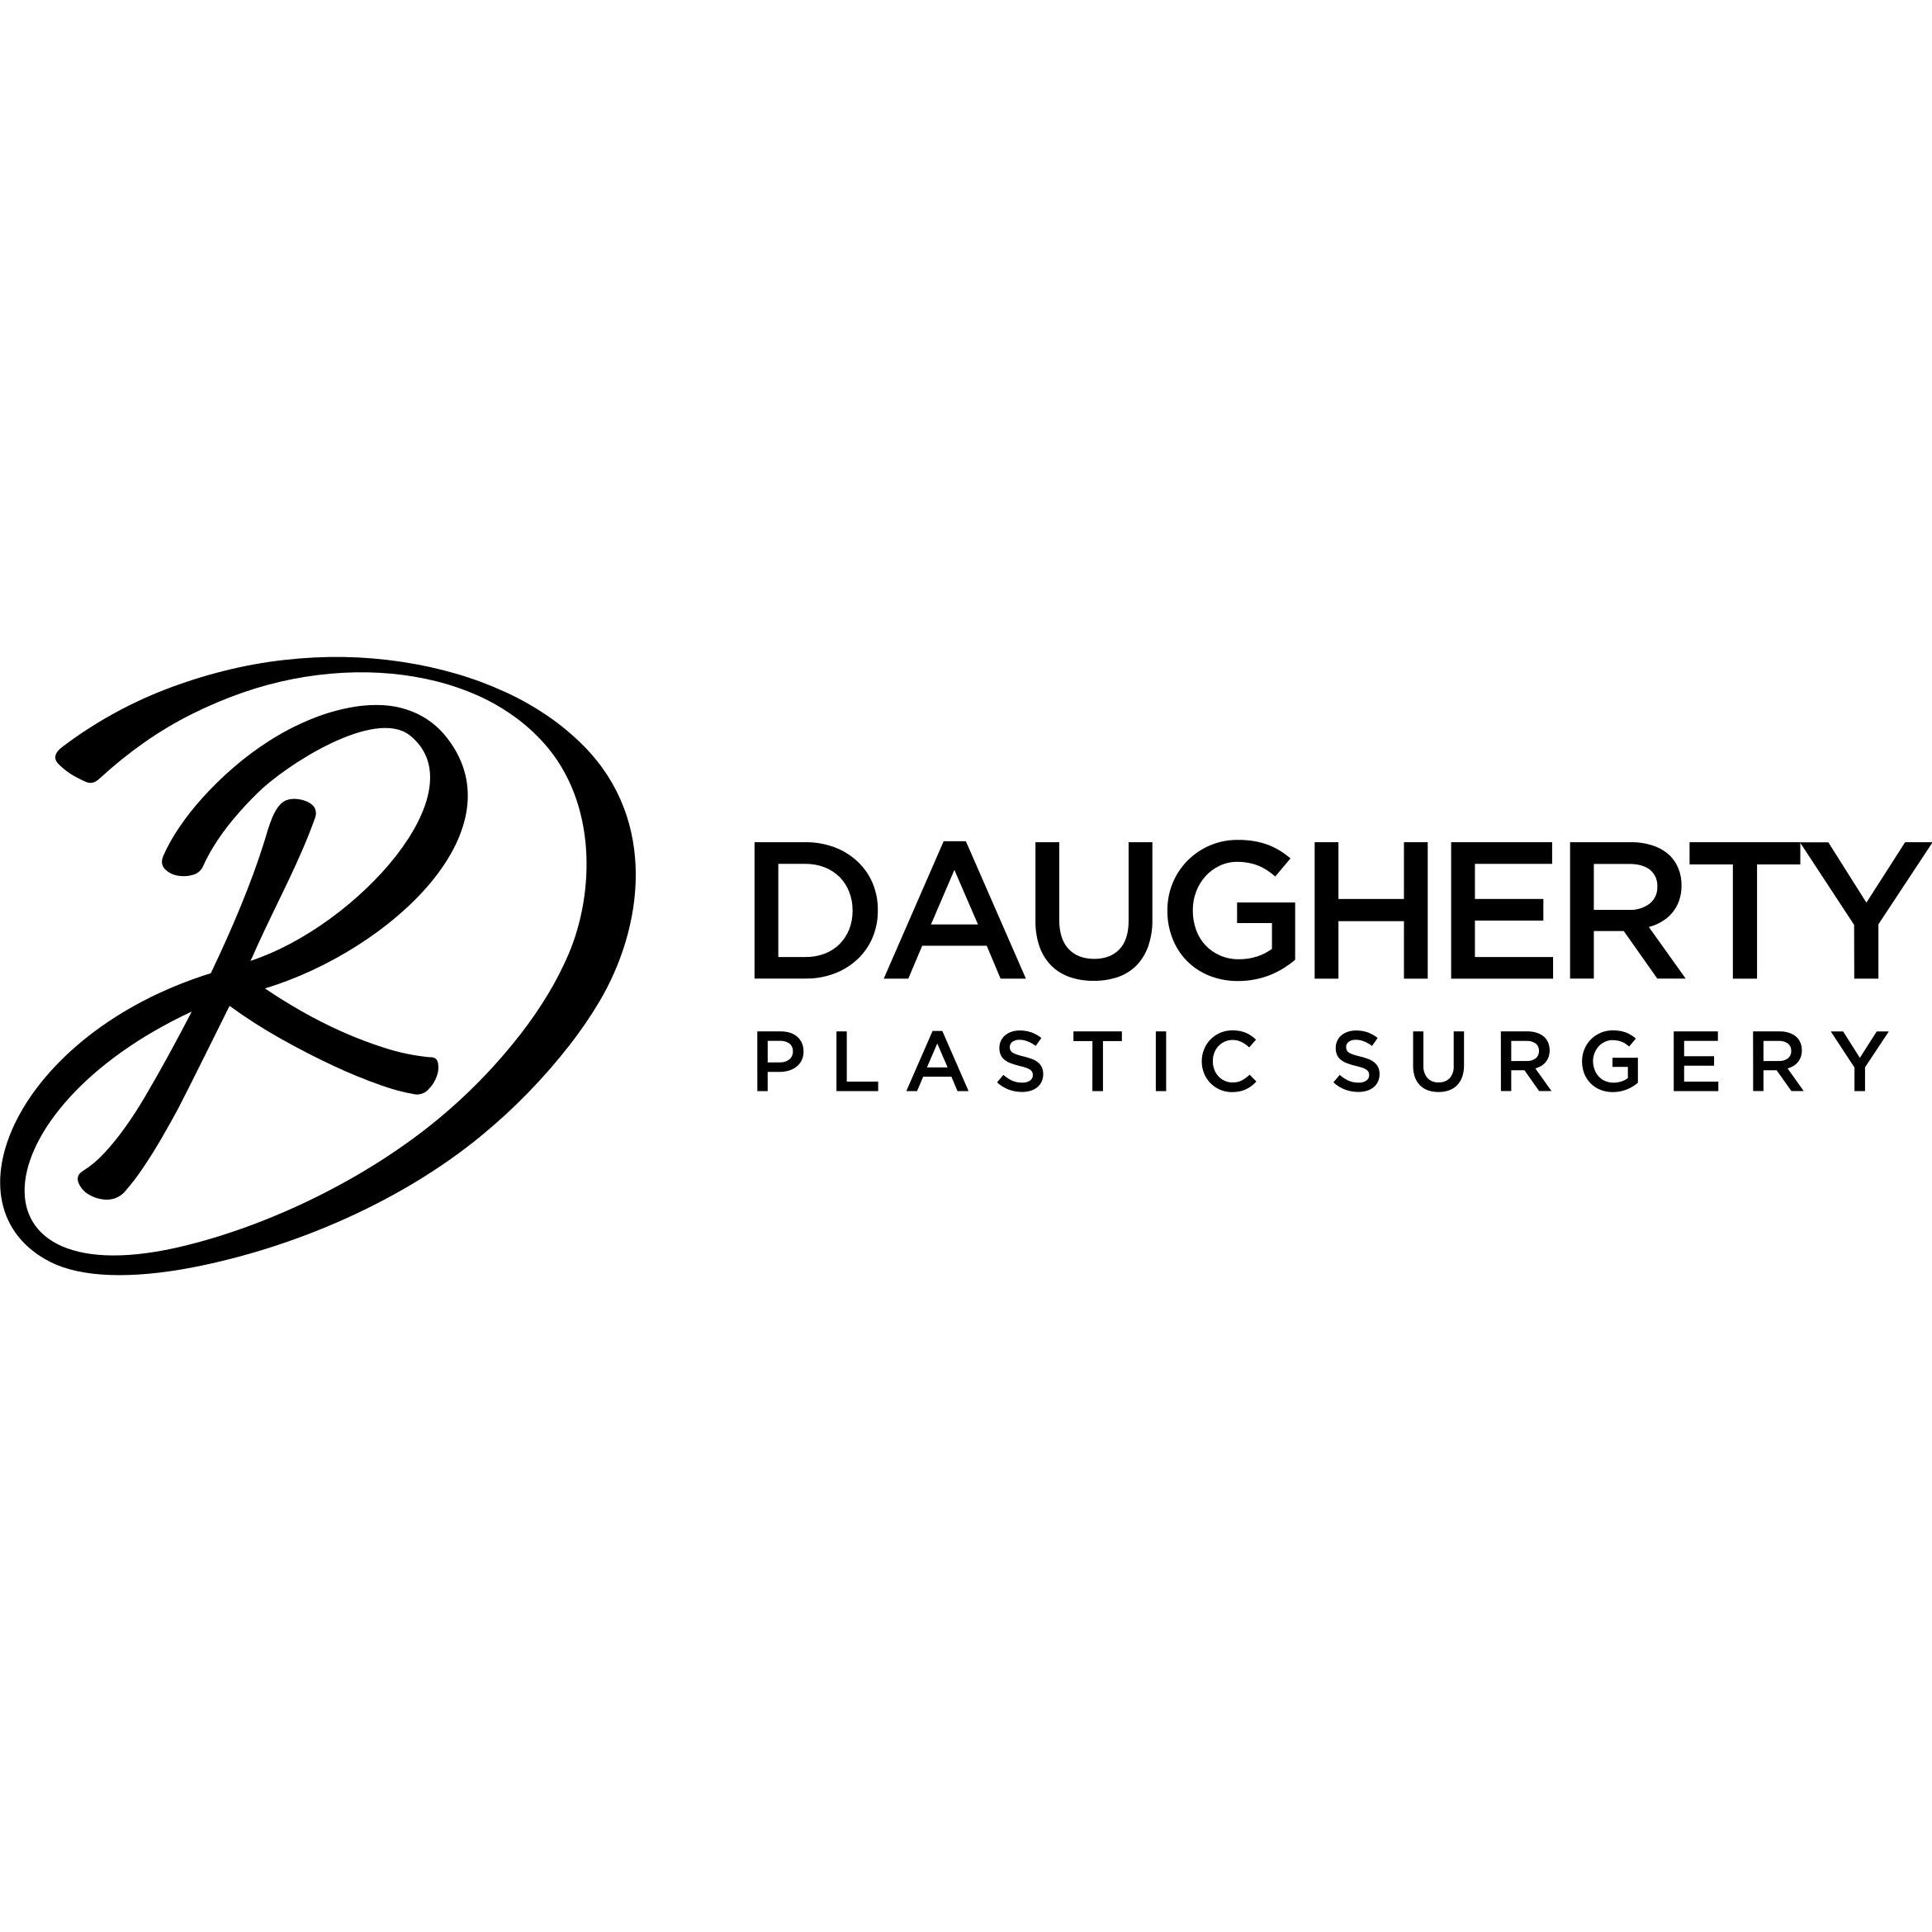 Daugherty Plastic Surgery: Robyn Daugherty, MD